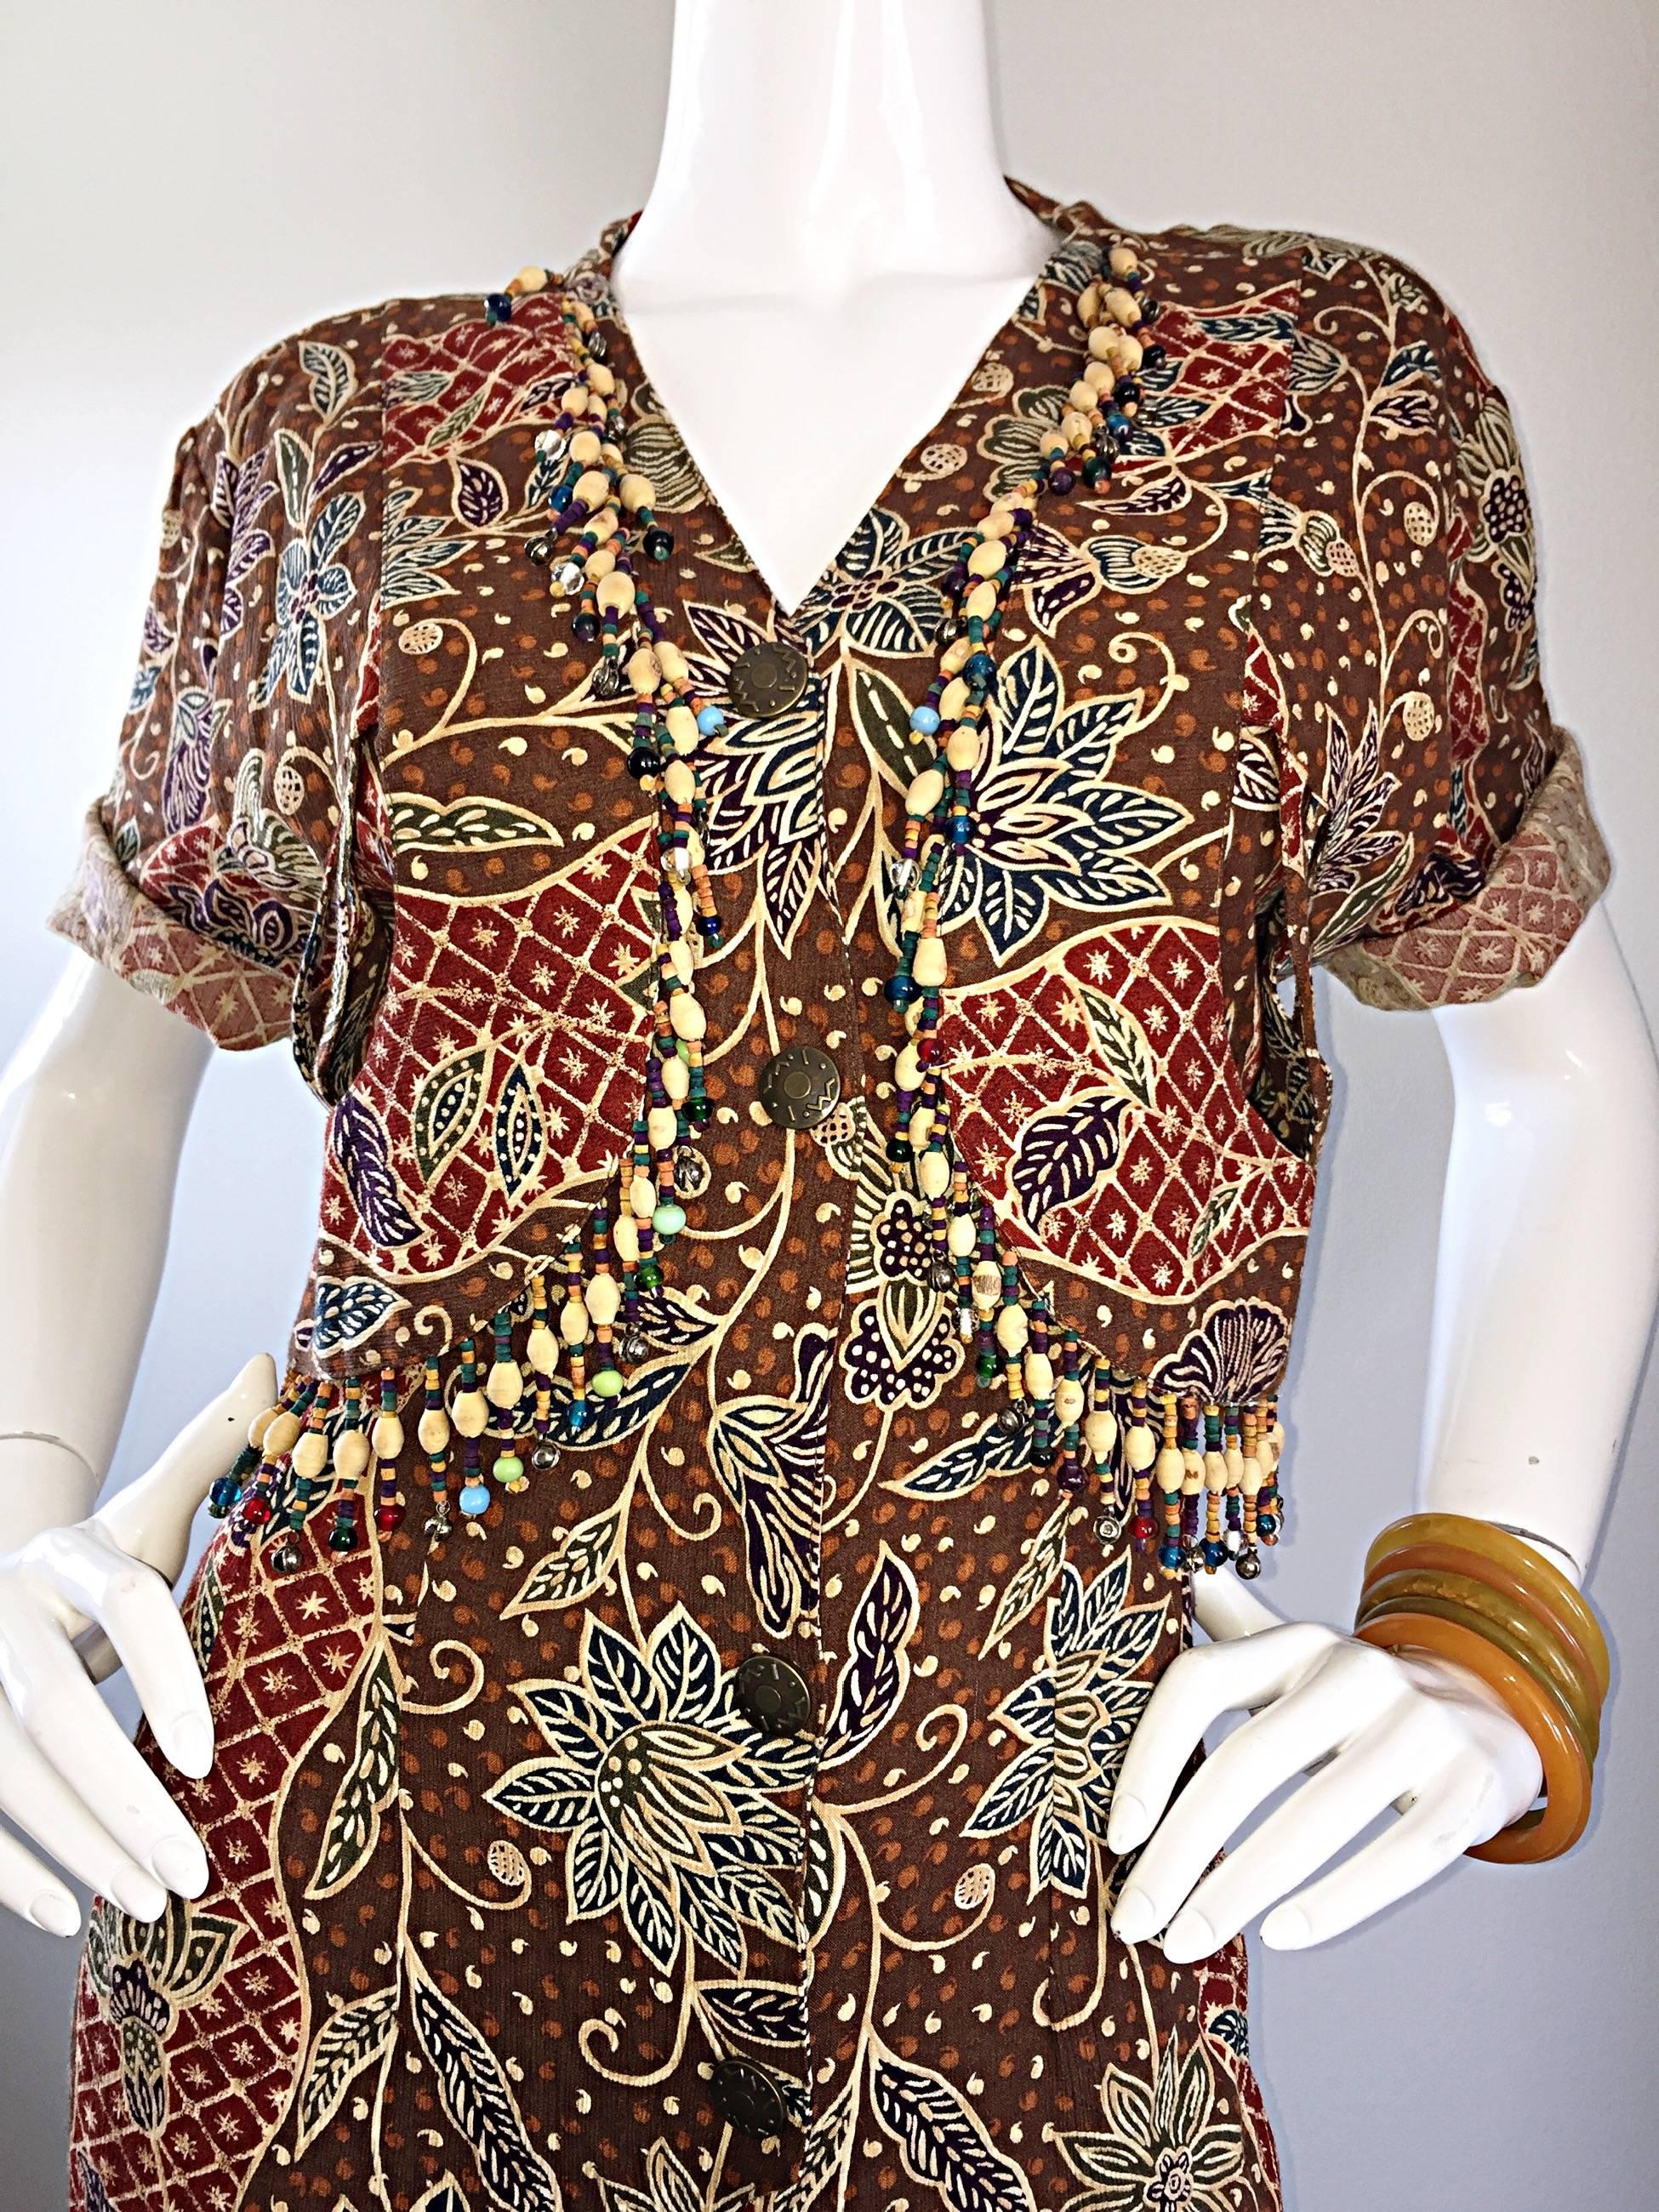 Women's Amazing Vintage Romper Shorts Jumpsuit w/ Tribal Ethnic Print + Beads + Bells For Sale